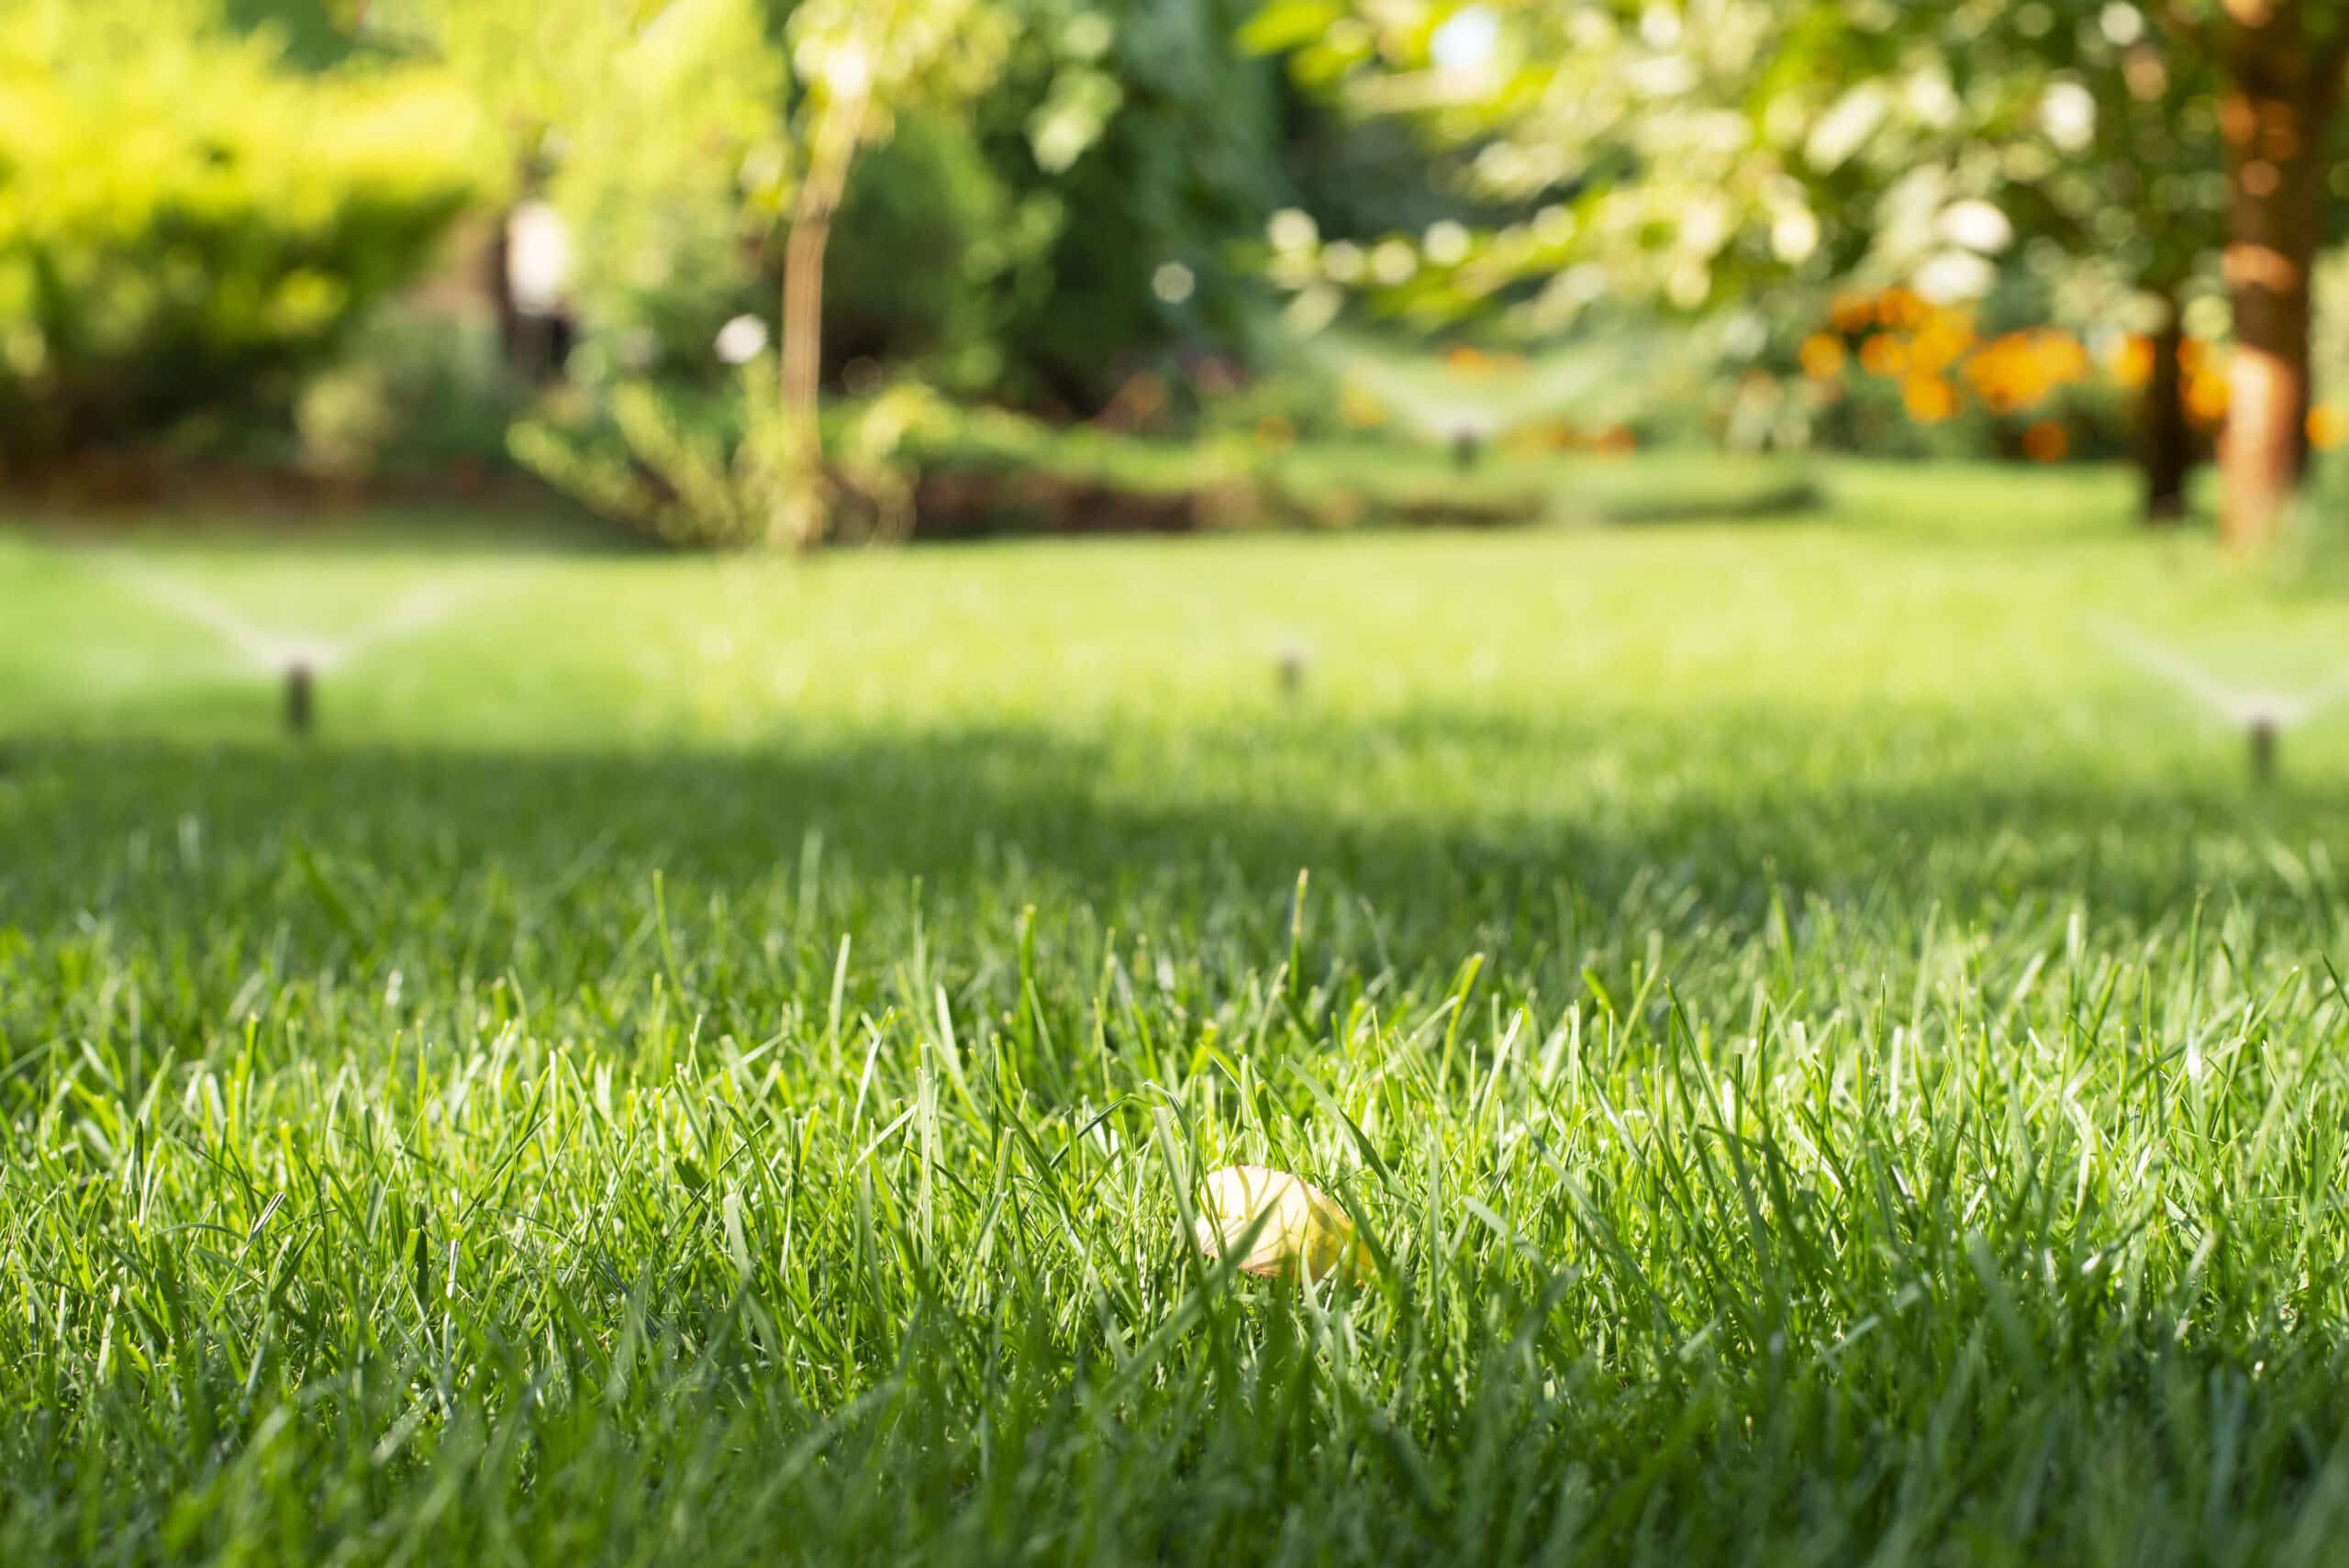 Irrigation Installation 6 | mowed green backyard grass with sprinkler system 2022 01 17 16 31 43 utc scaled